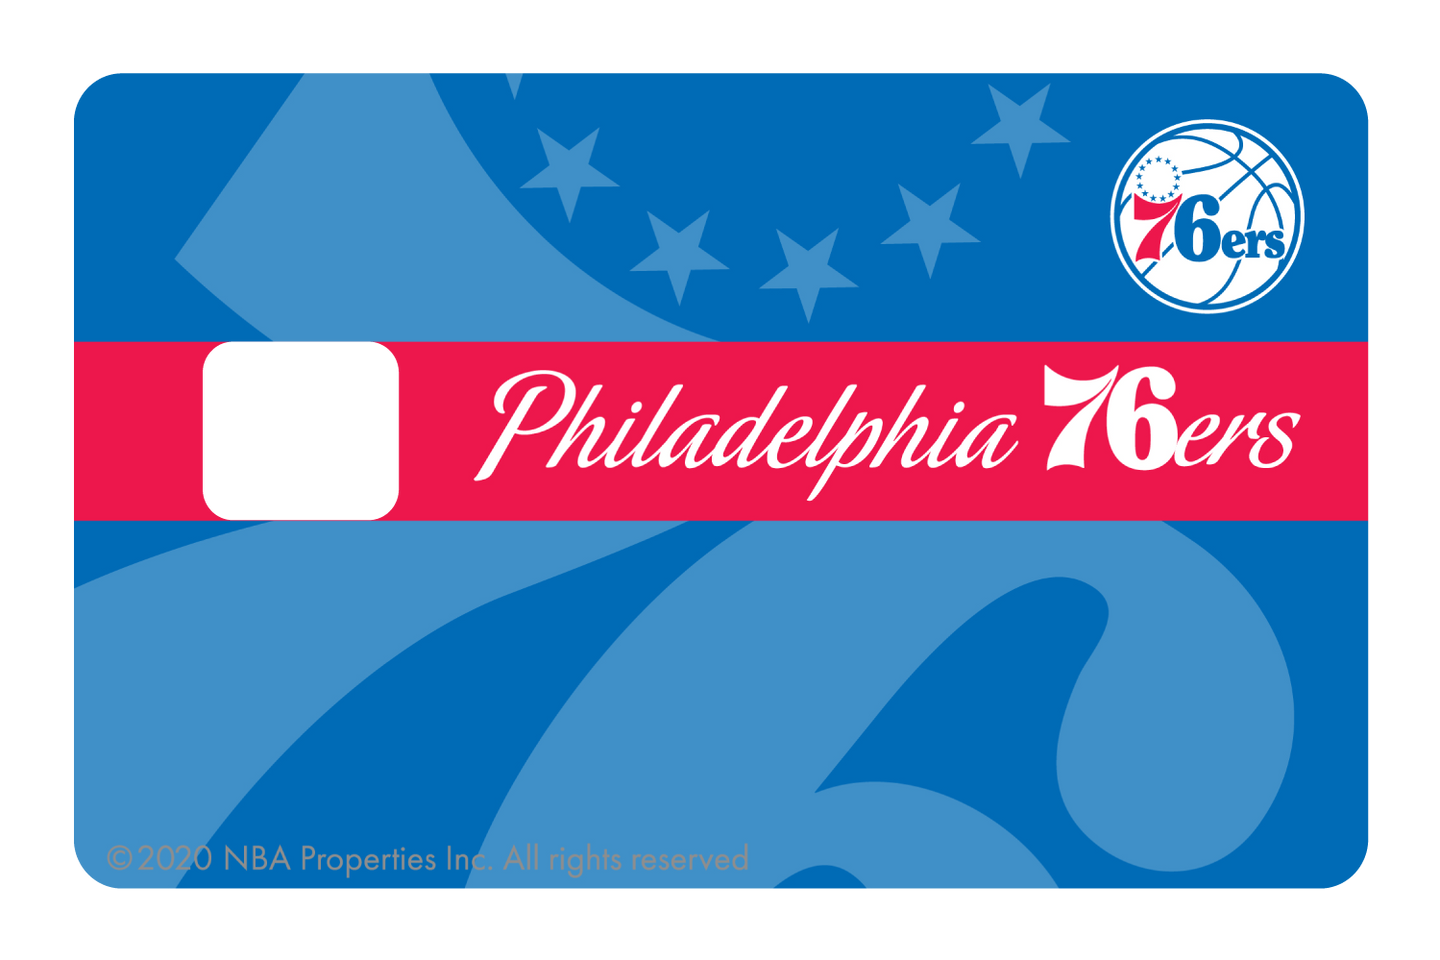 Philadelphia 76ers: Midcourt